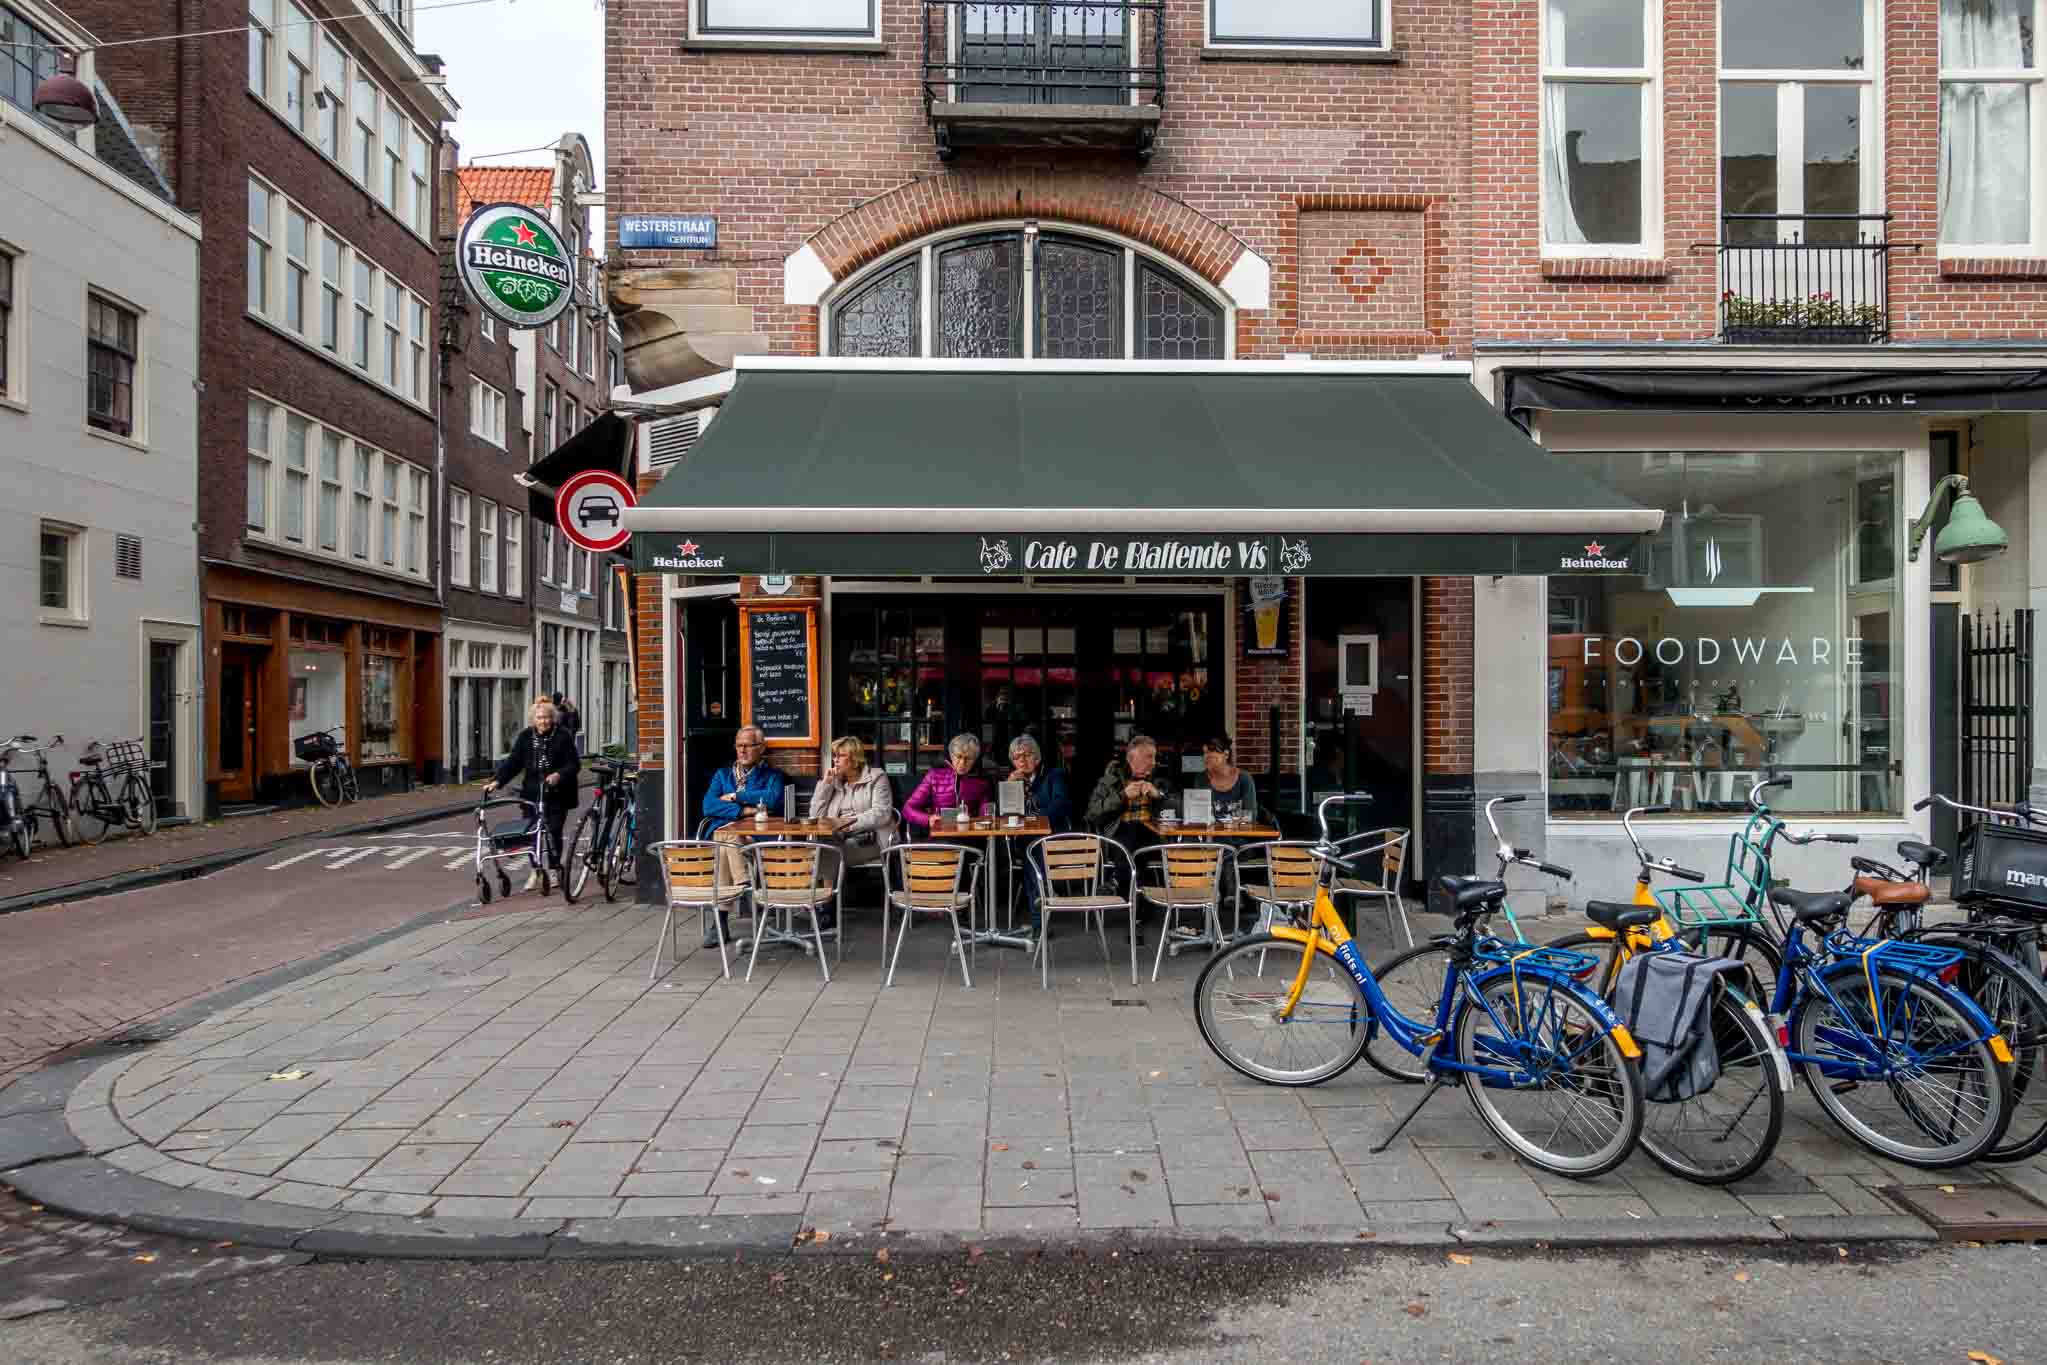 People sitting at a sidewalk cafe